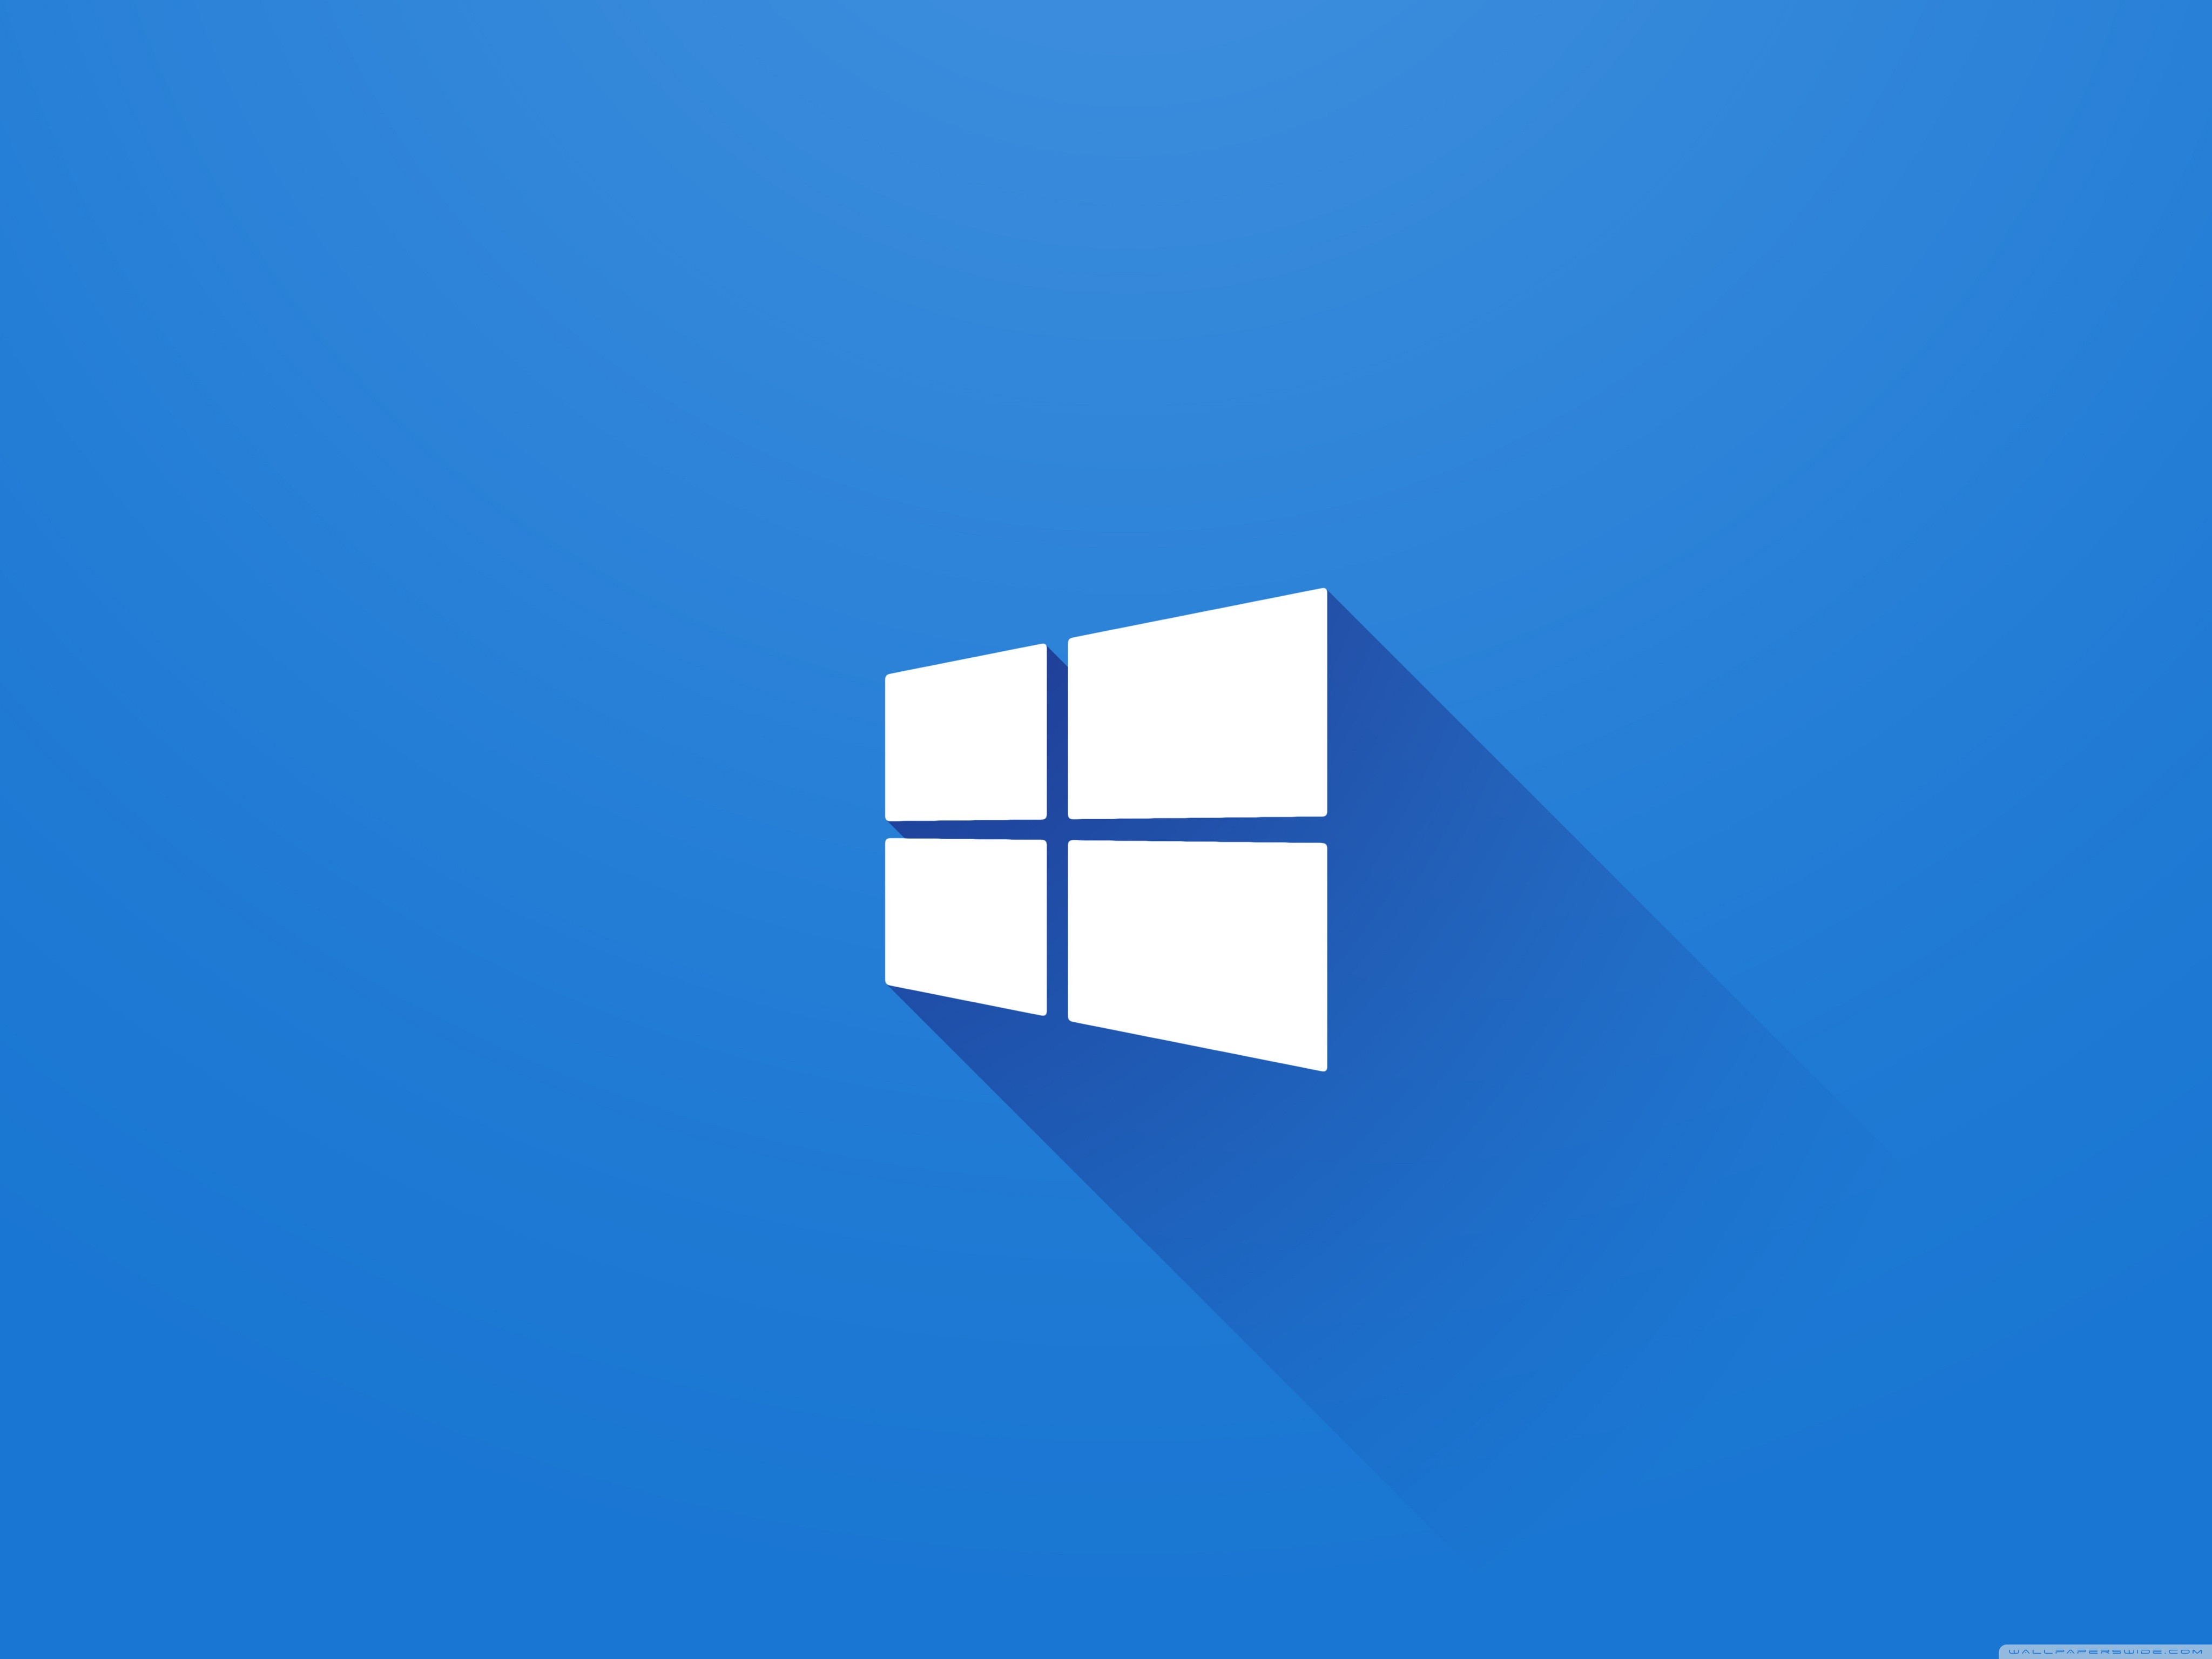 Windows 10 Wallpaper, OS: Windows 10, Microsoft, blue